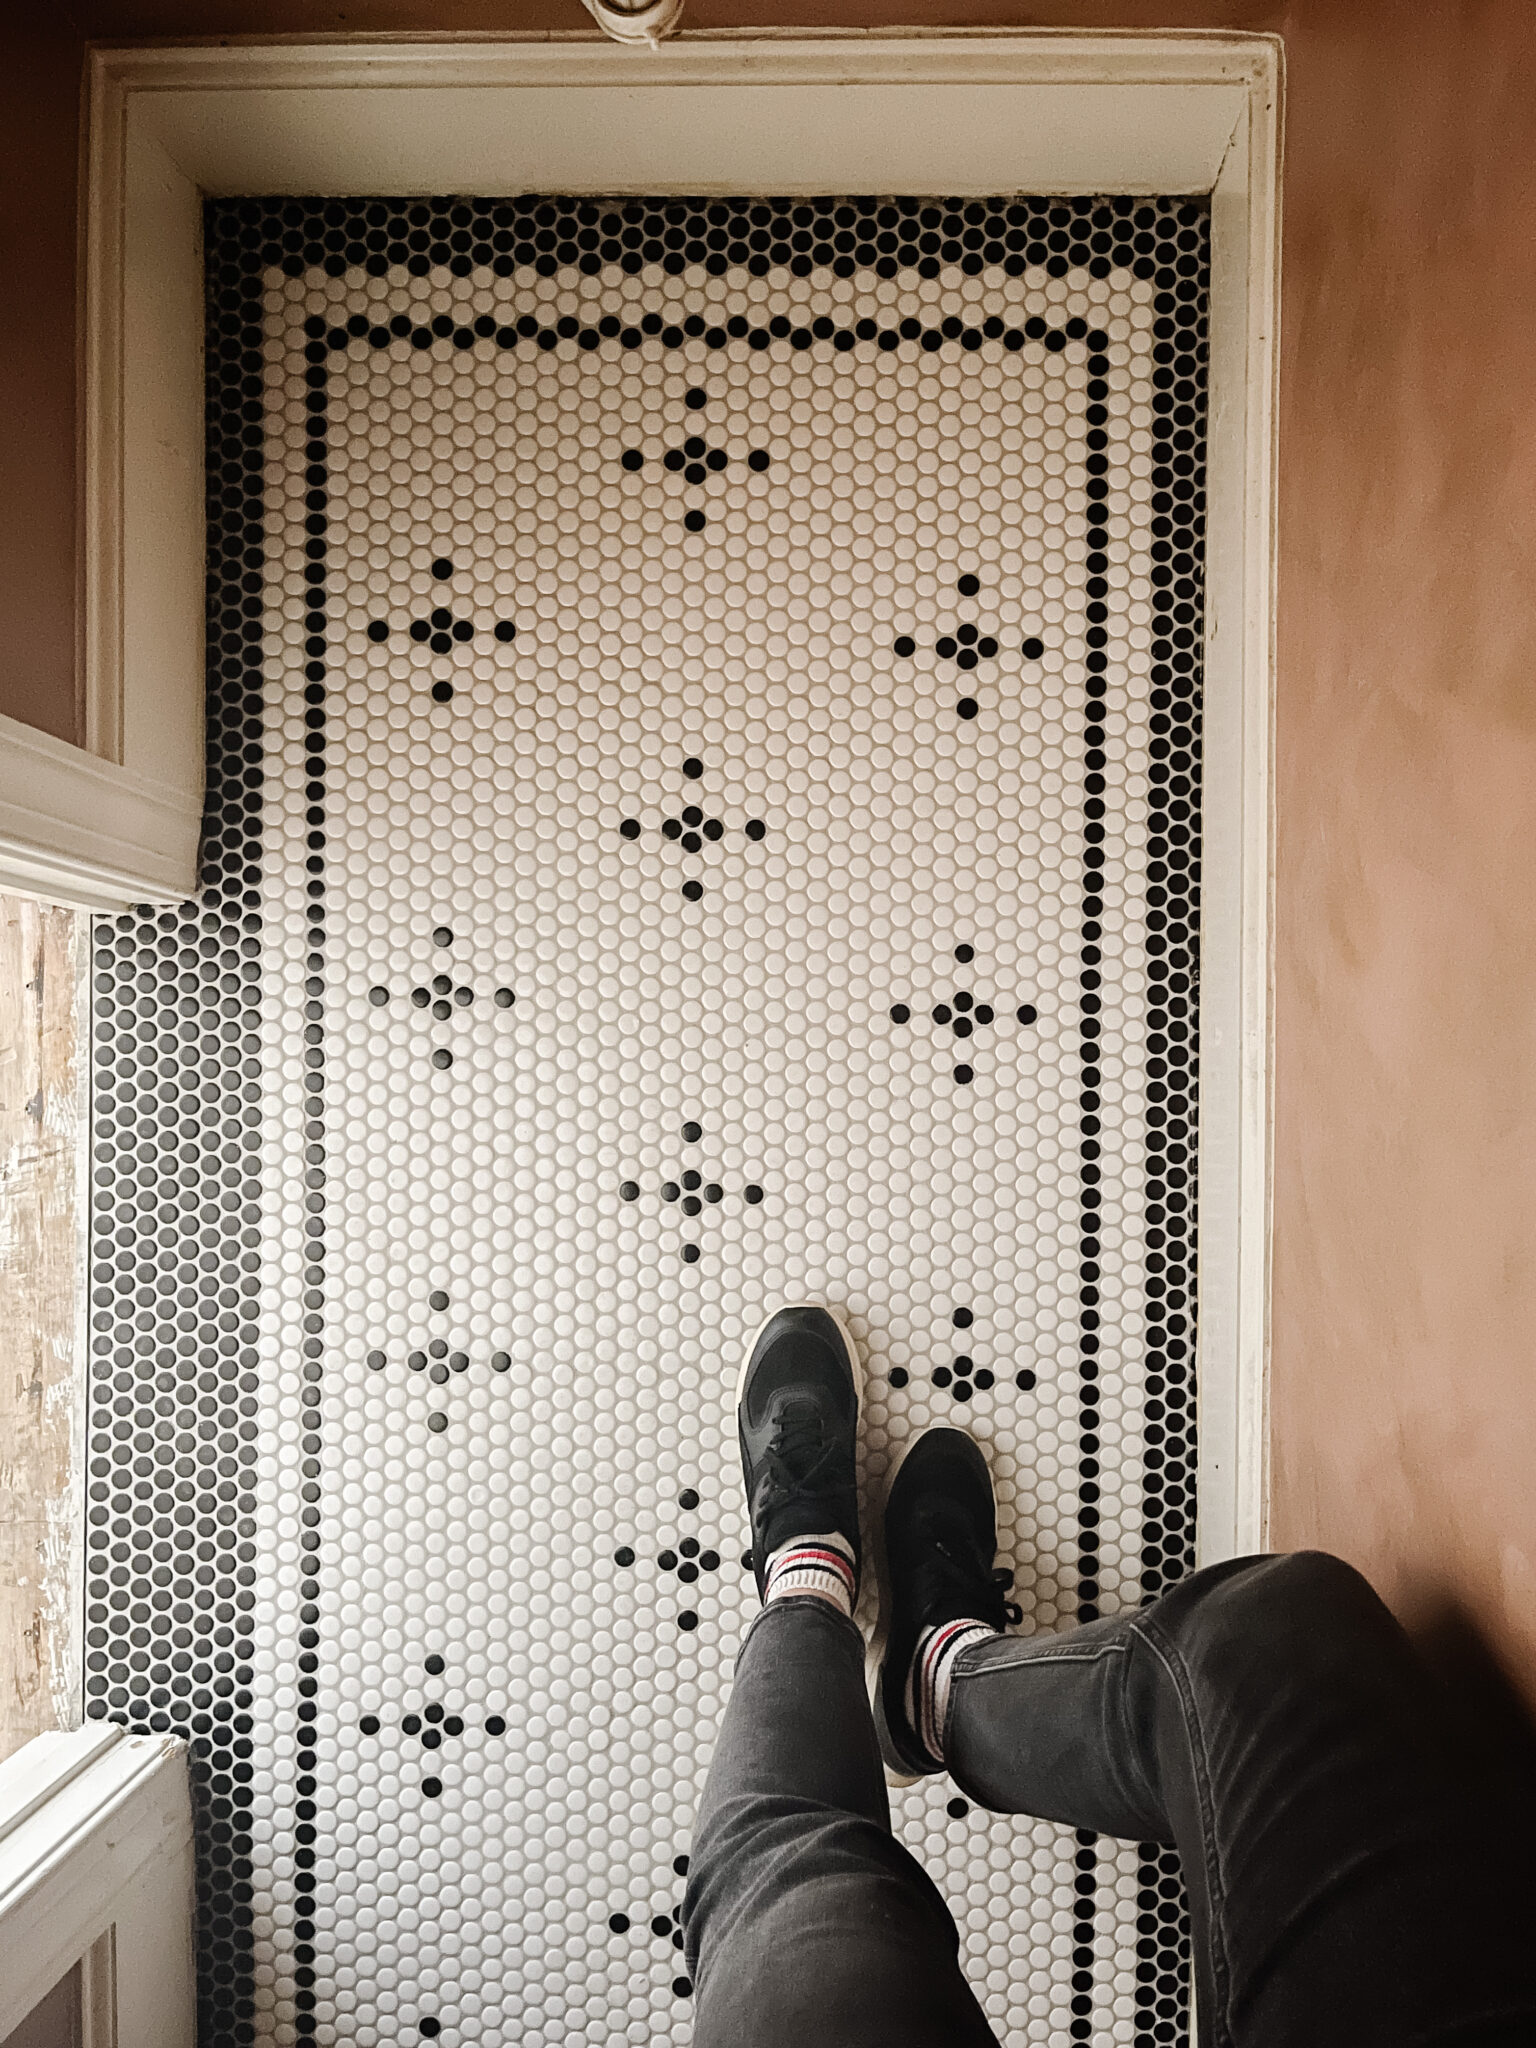 Diy Your Own Penny Tile Patterned Floor, Penny Round Tile Shower